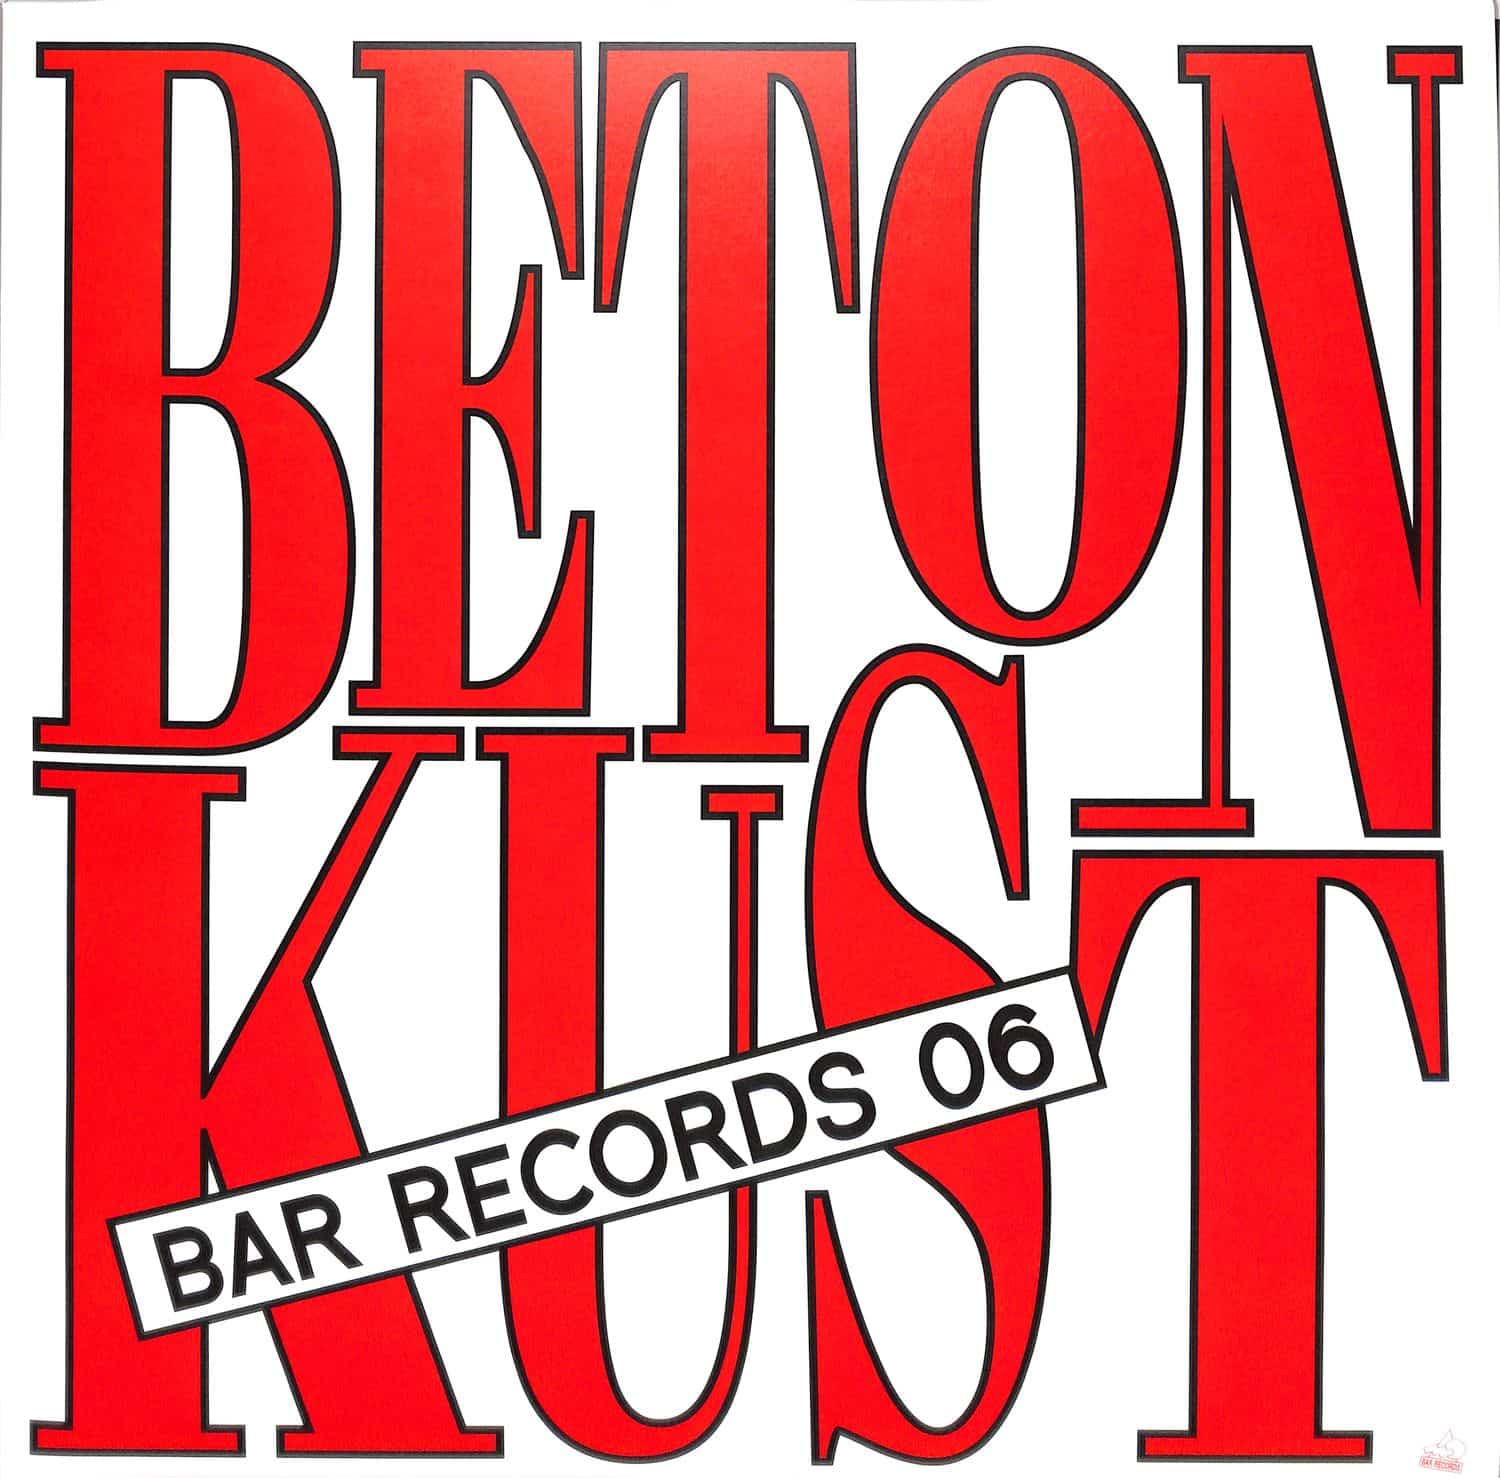 Betonkust - BAR RECORDS 06